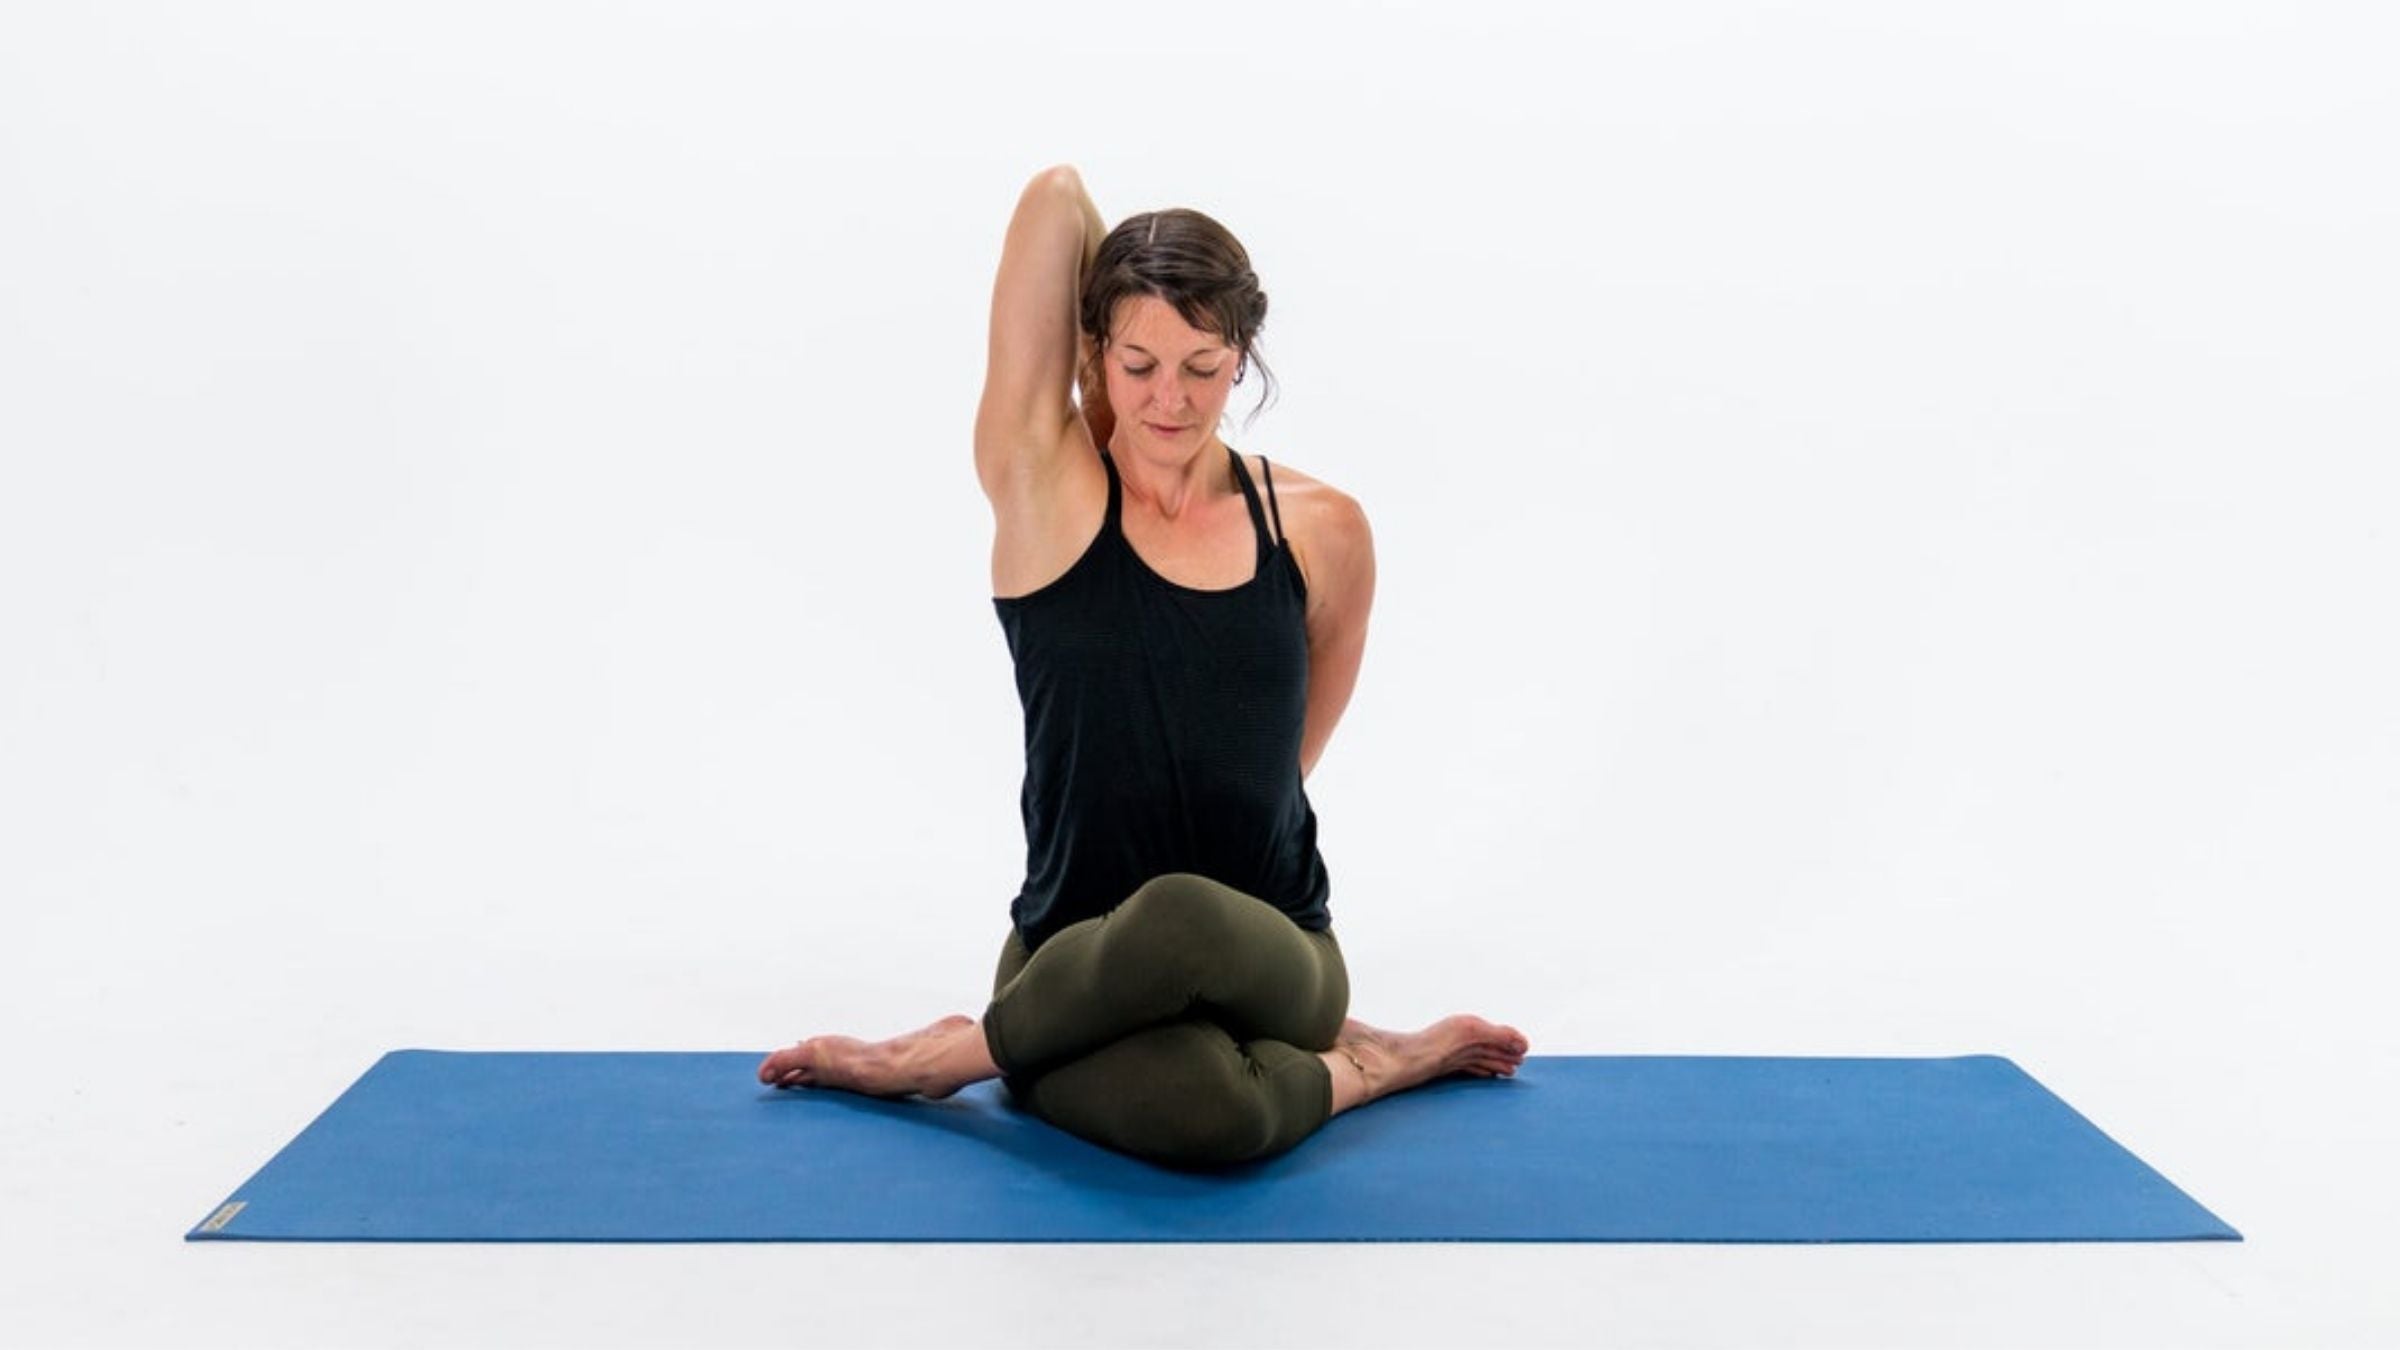 How to do Balancing Stick Pose | Yoga help, Yoga pilates, Yoga moves